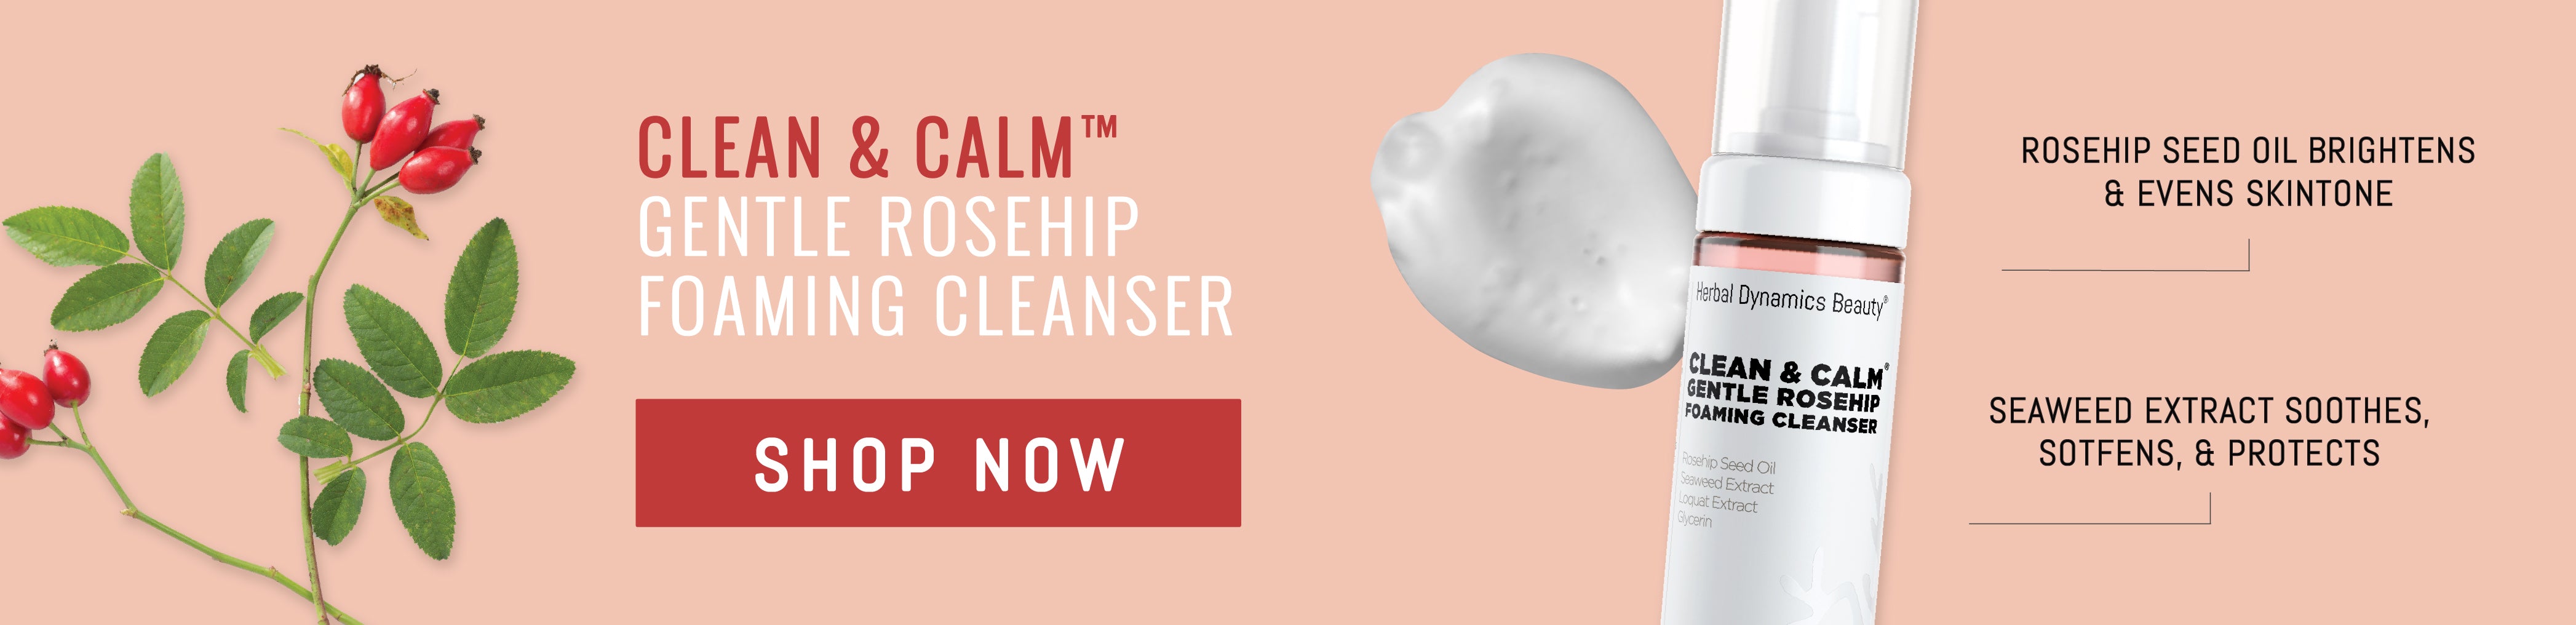 Herbal Dynamics Beauty Rosehip Cleanser